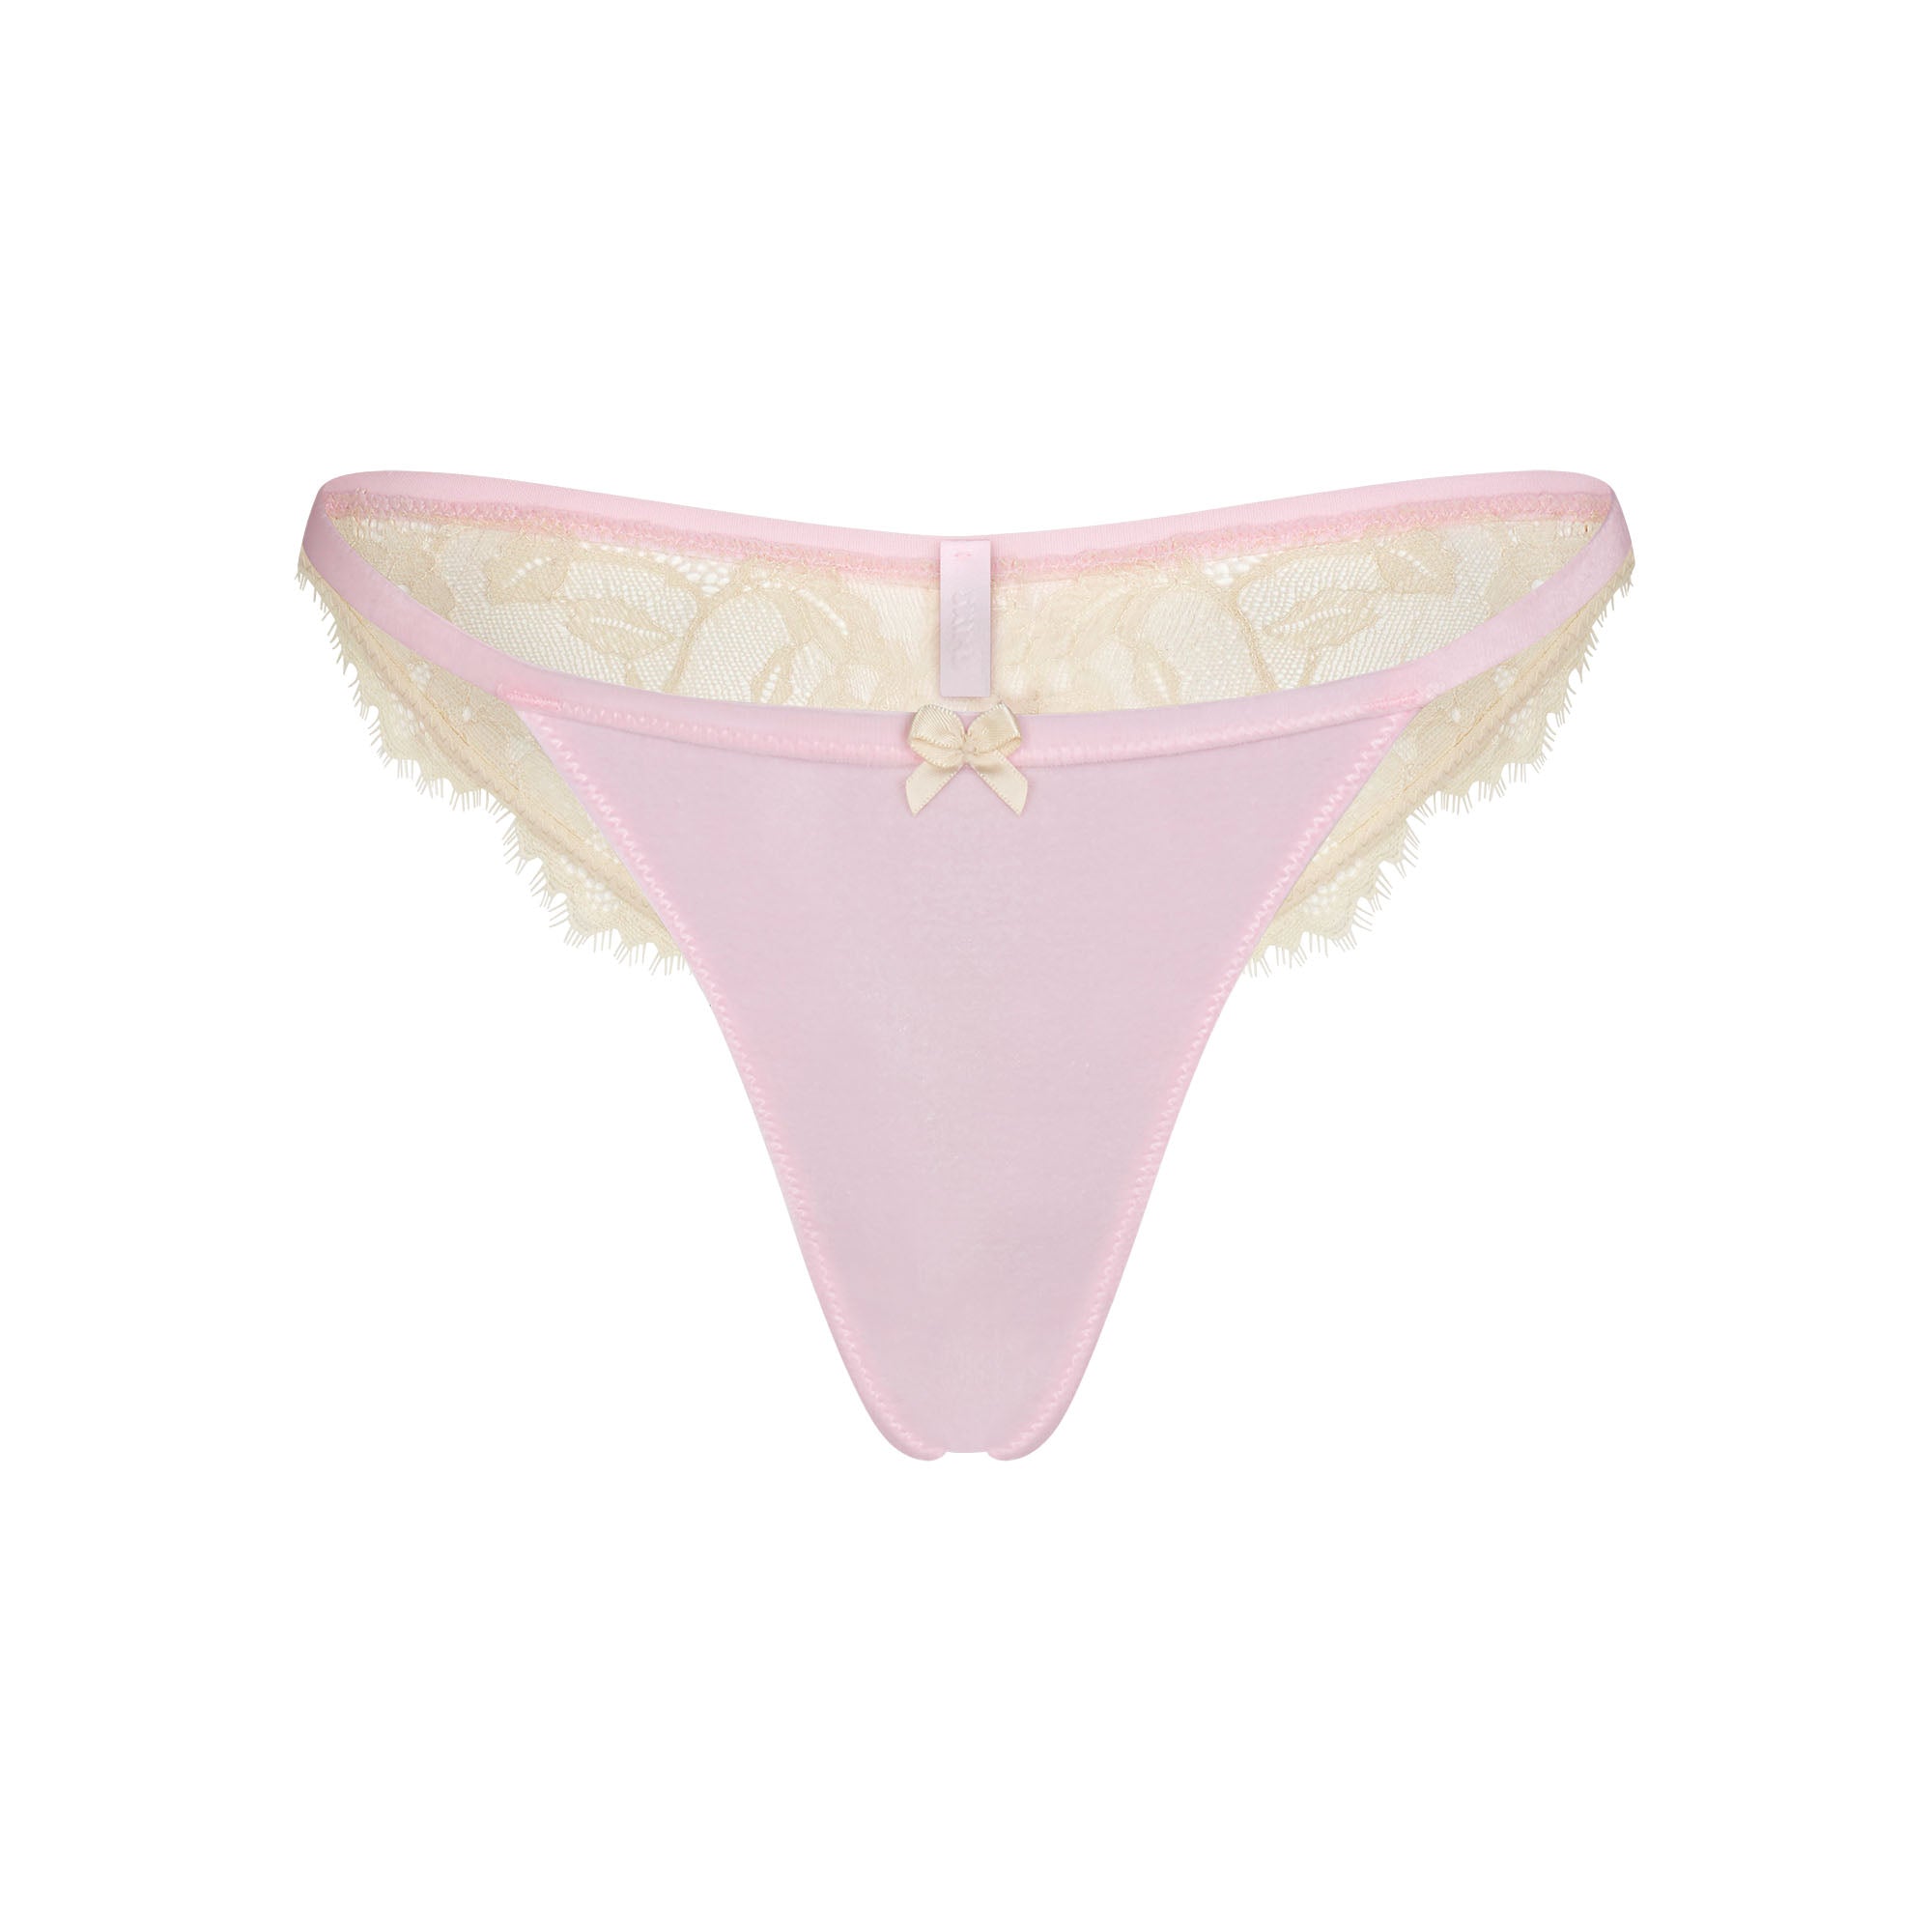 Skims Velvet Lace Bikini In Stock Availability and Price Tracking